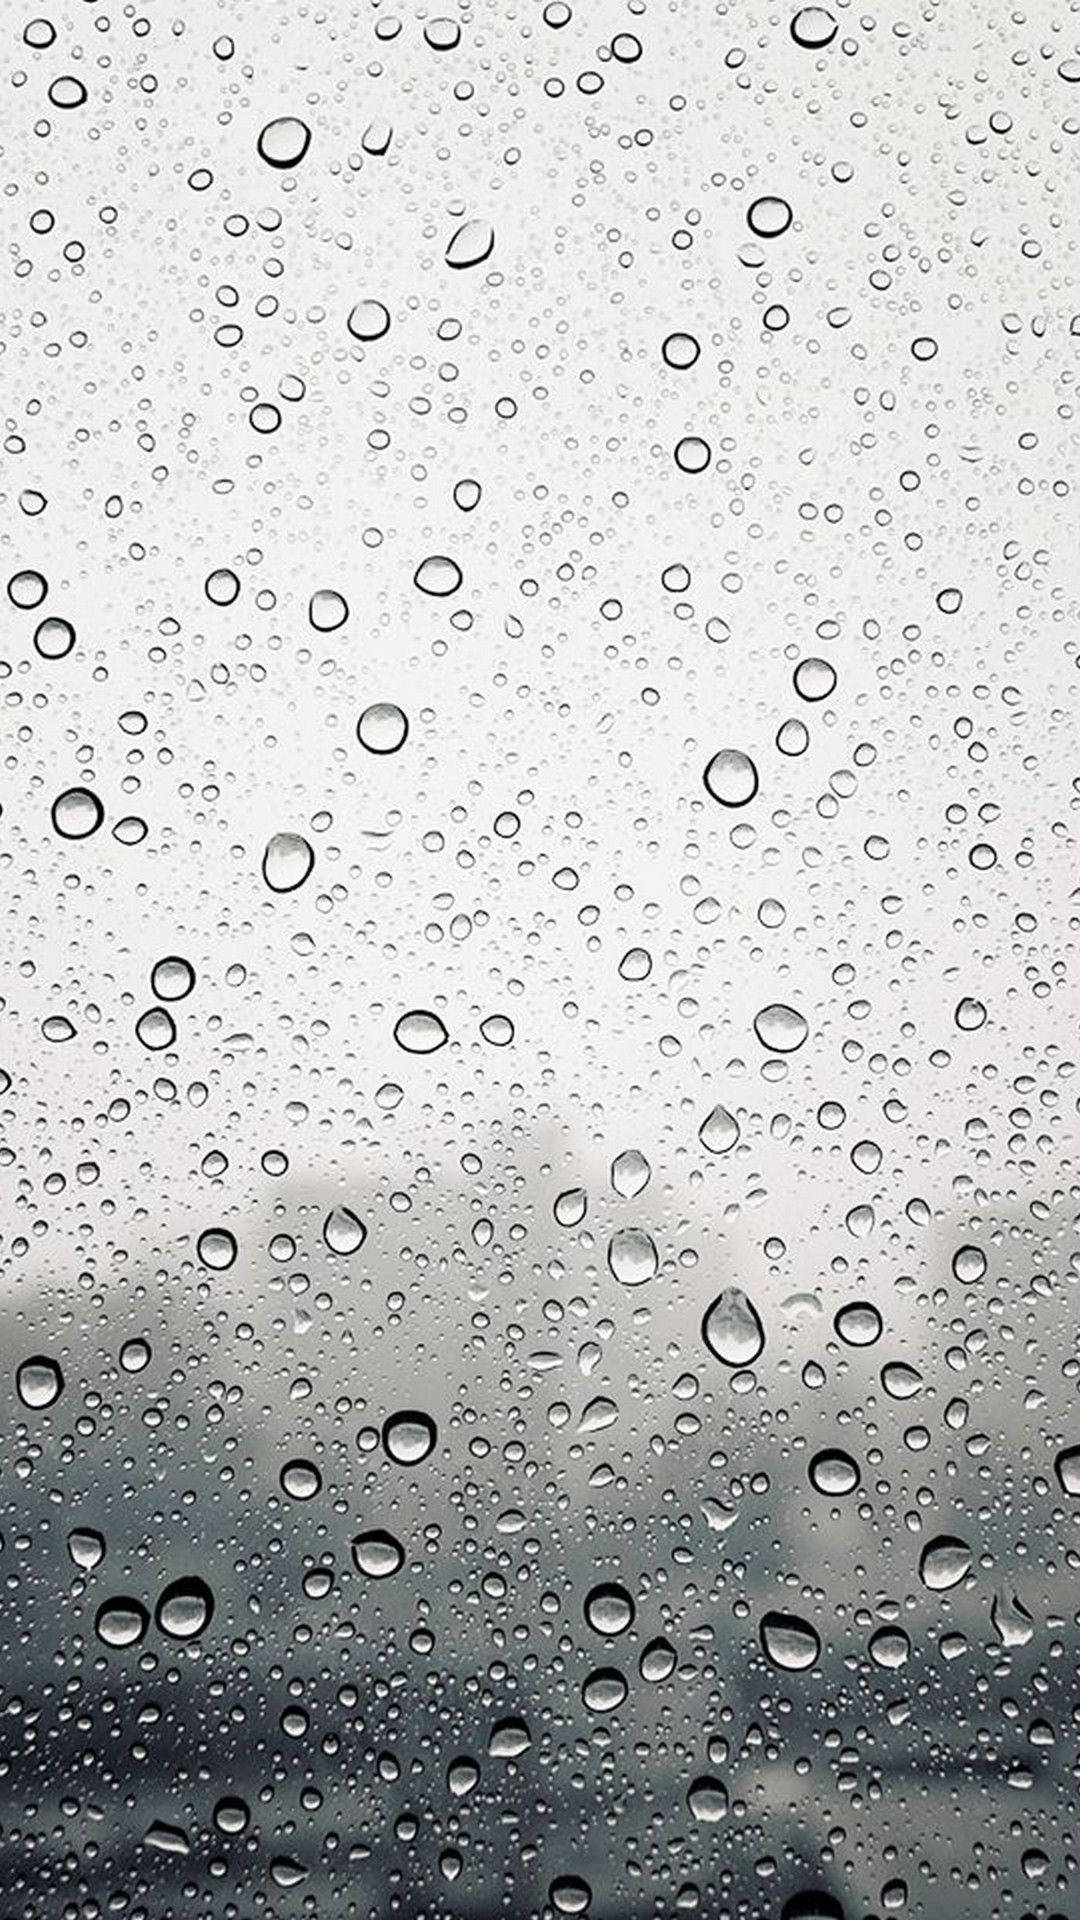 Cooliphone Rain Screen Theme - Sval Iphone-regn Skärmtema. Wallpaper